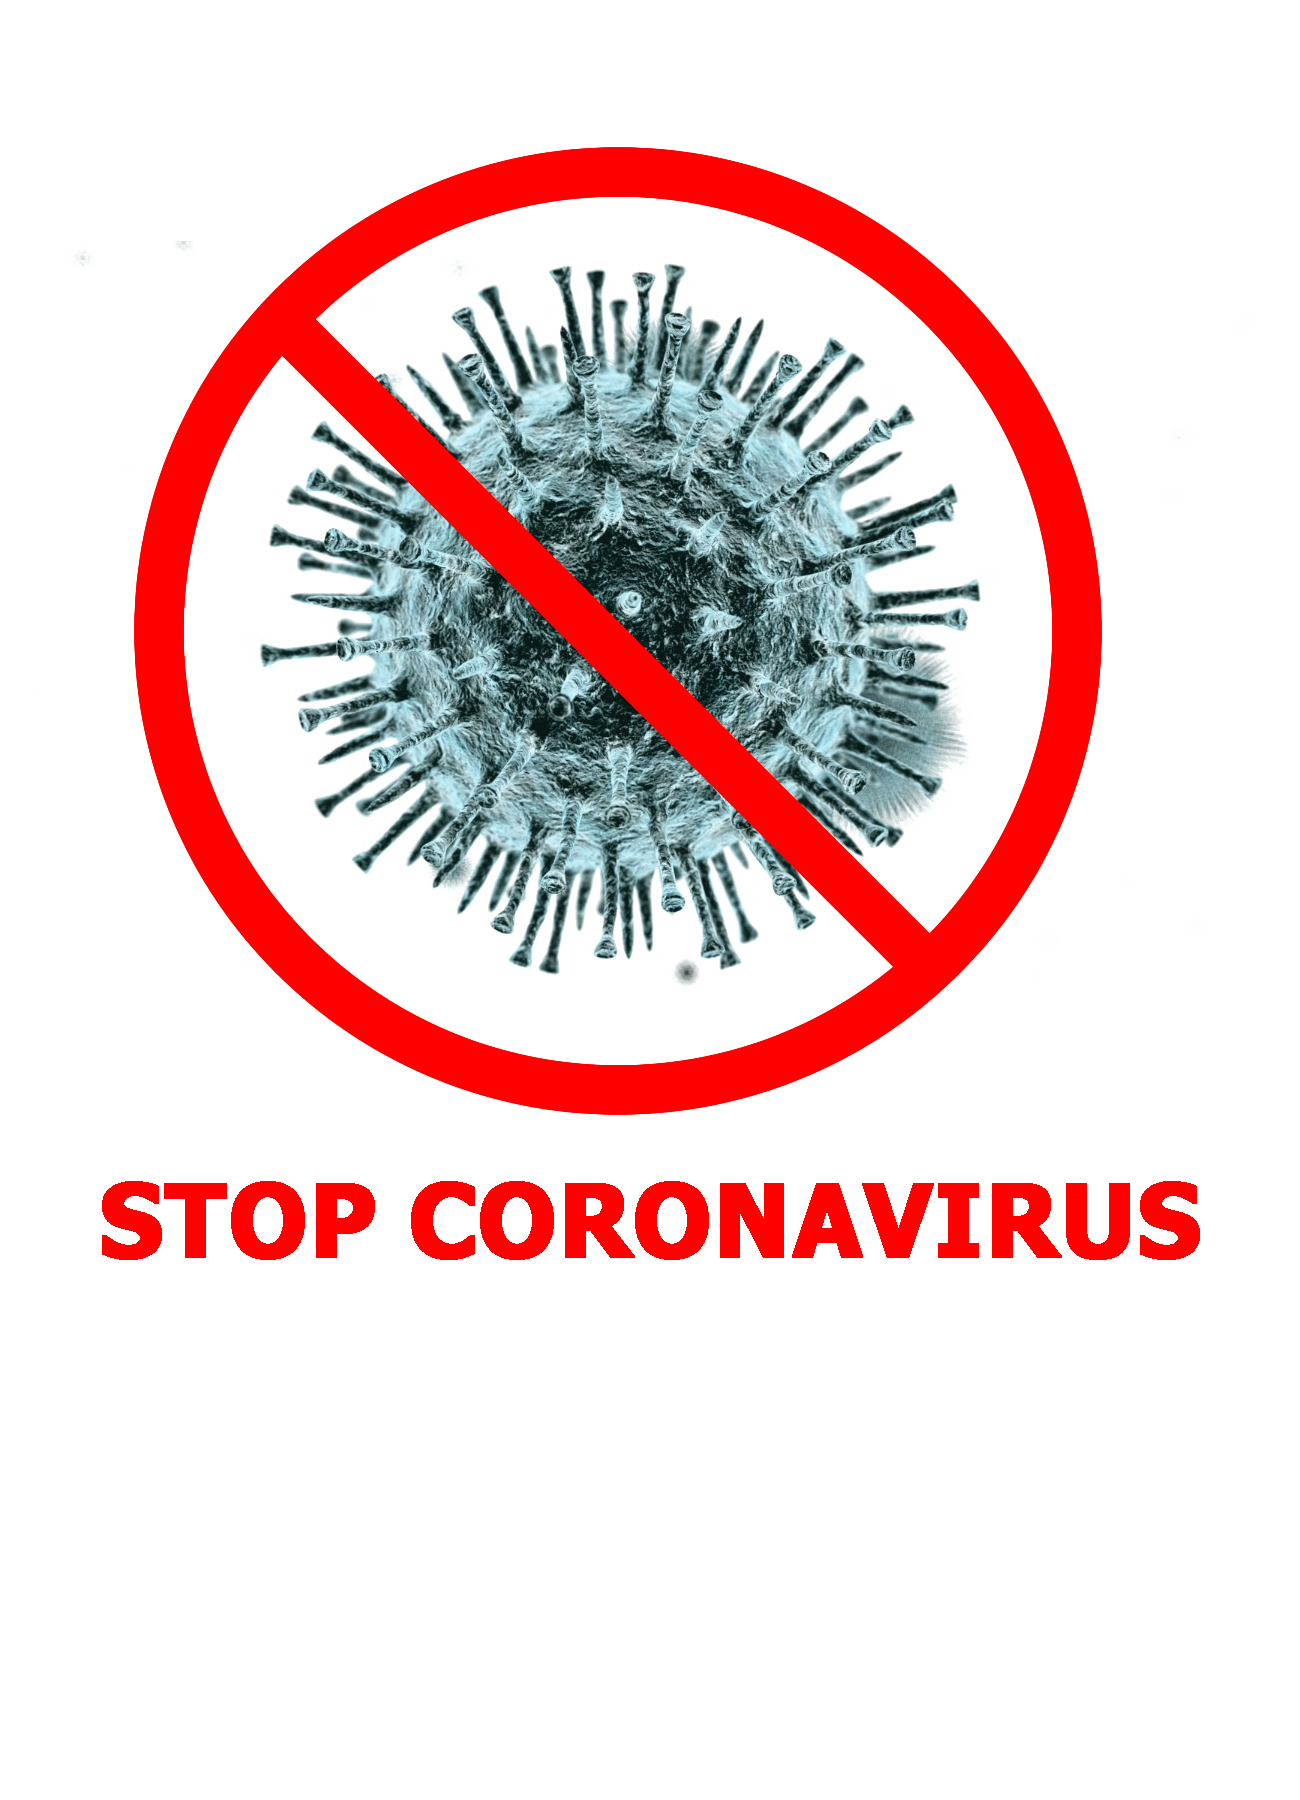 Coronavirus Stop Sign Free HD Image PNG Image